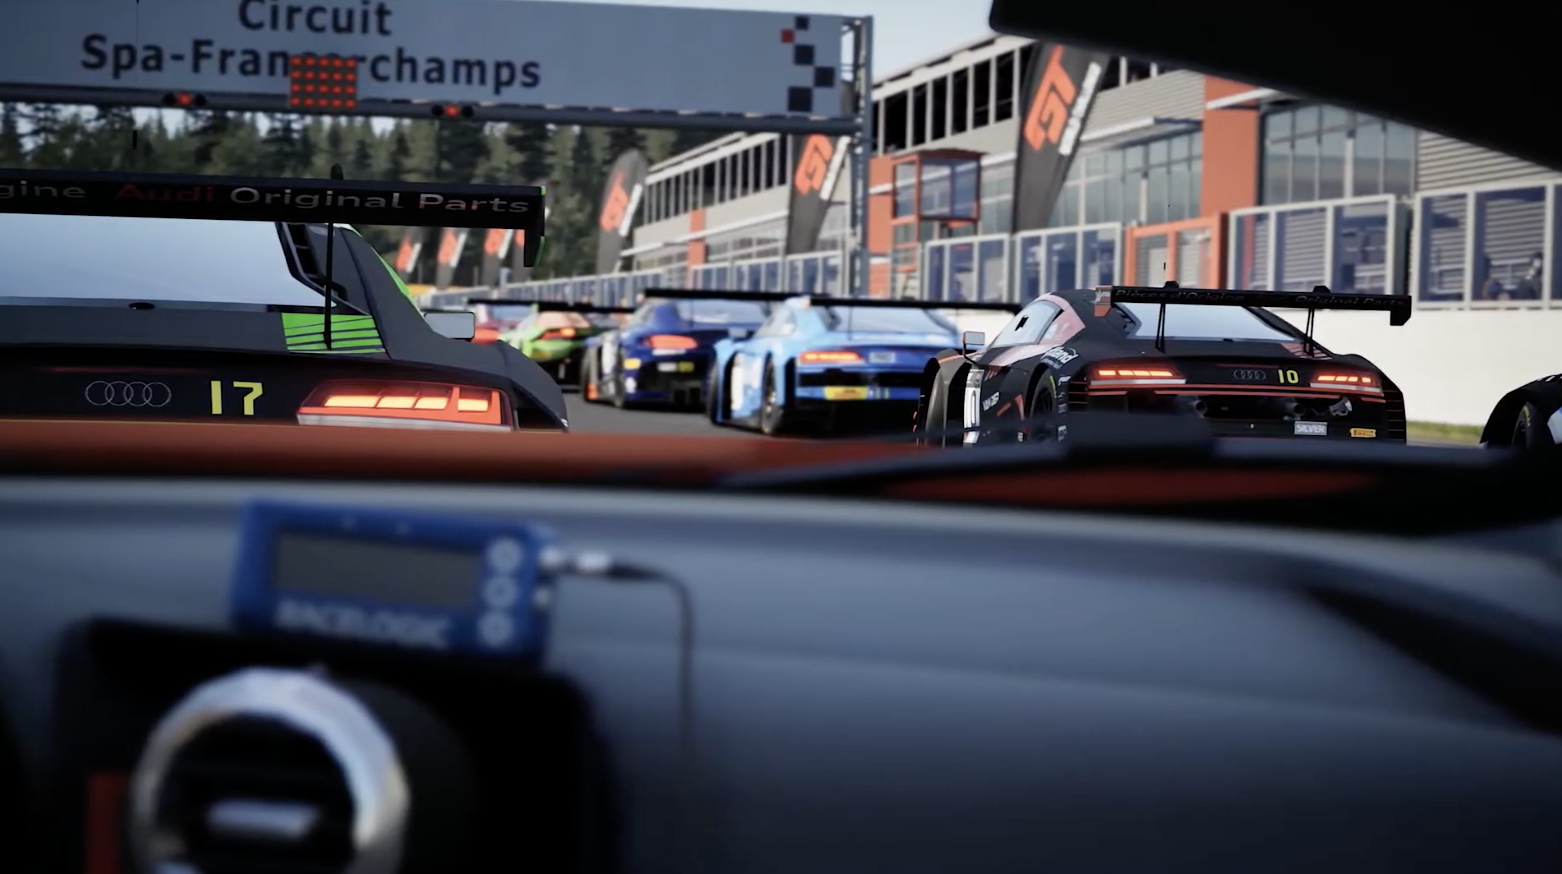 Assetto Corsa Competizione Game Modes Trailer Revealed, Coming to